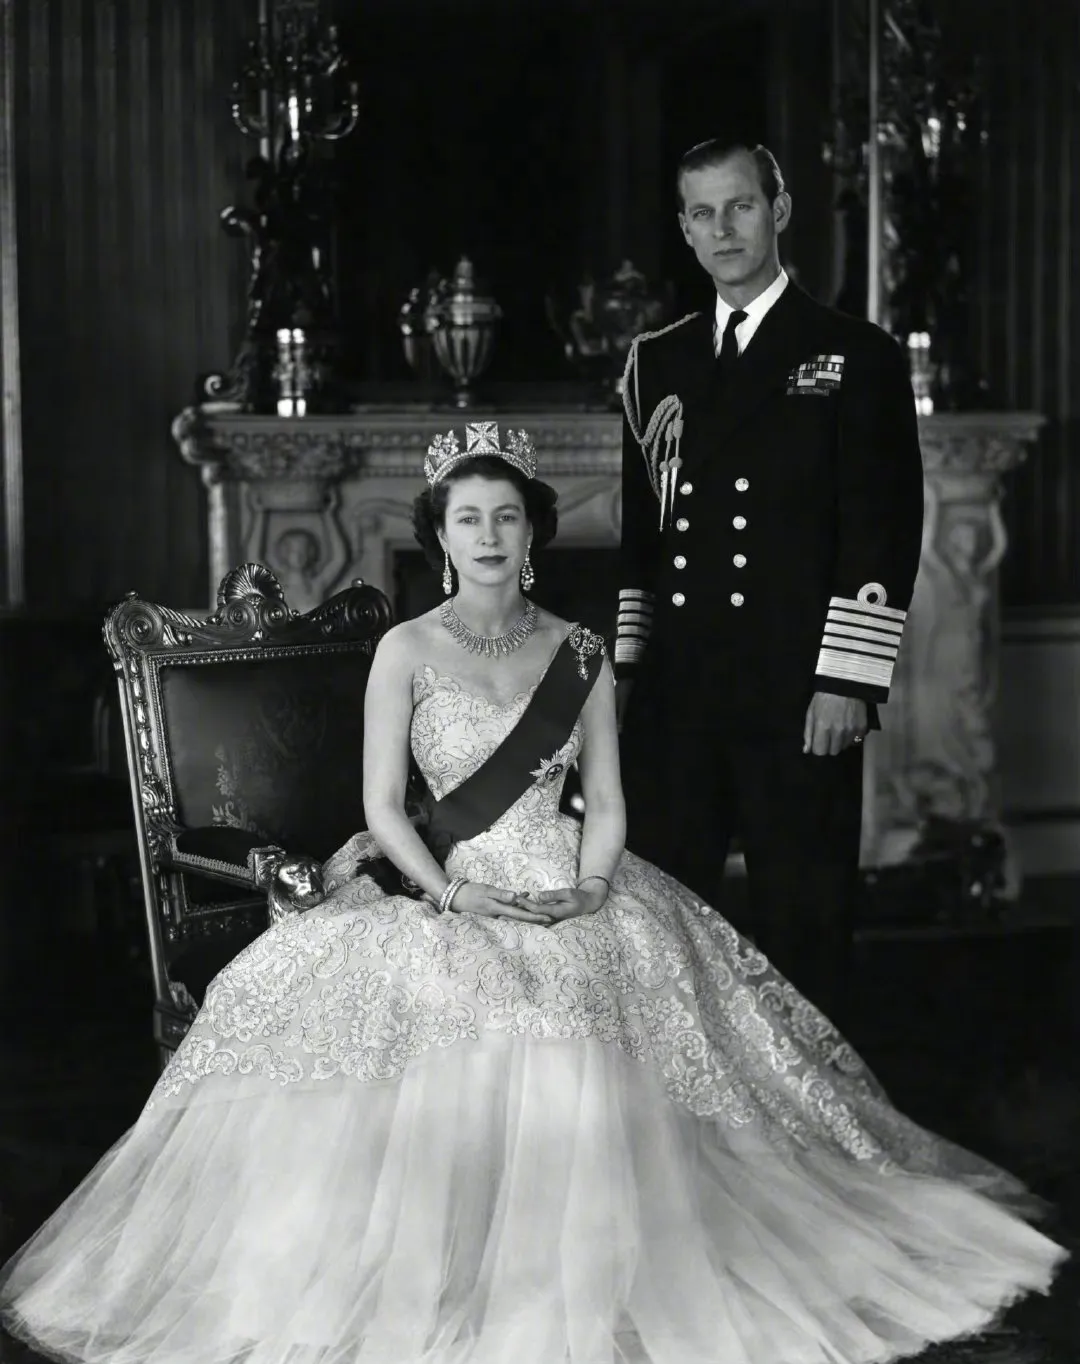 Queen Elizabeth Alexandra Mary Windsor dies at 96 | FMV6